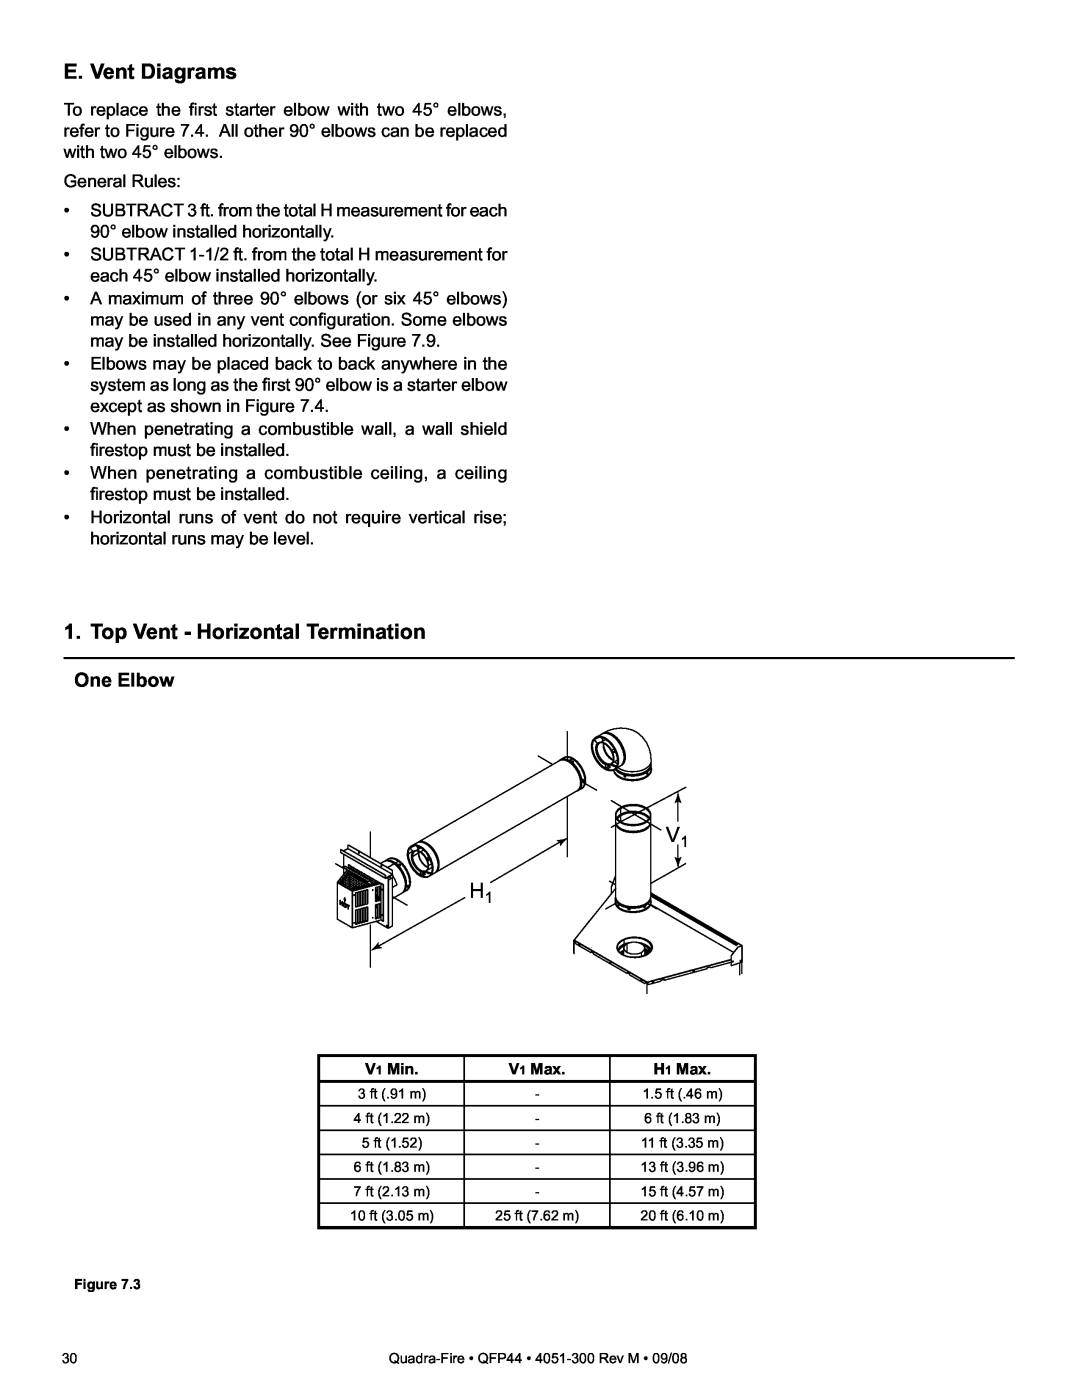 Quadra-Fire QFP44 owner manual E. Vent Diagrams, Top Vent - Horizontal Termination, V1 H1, One Elbow 